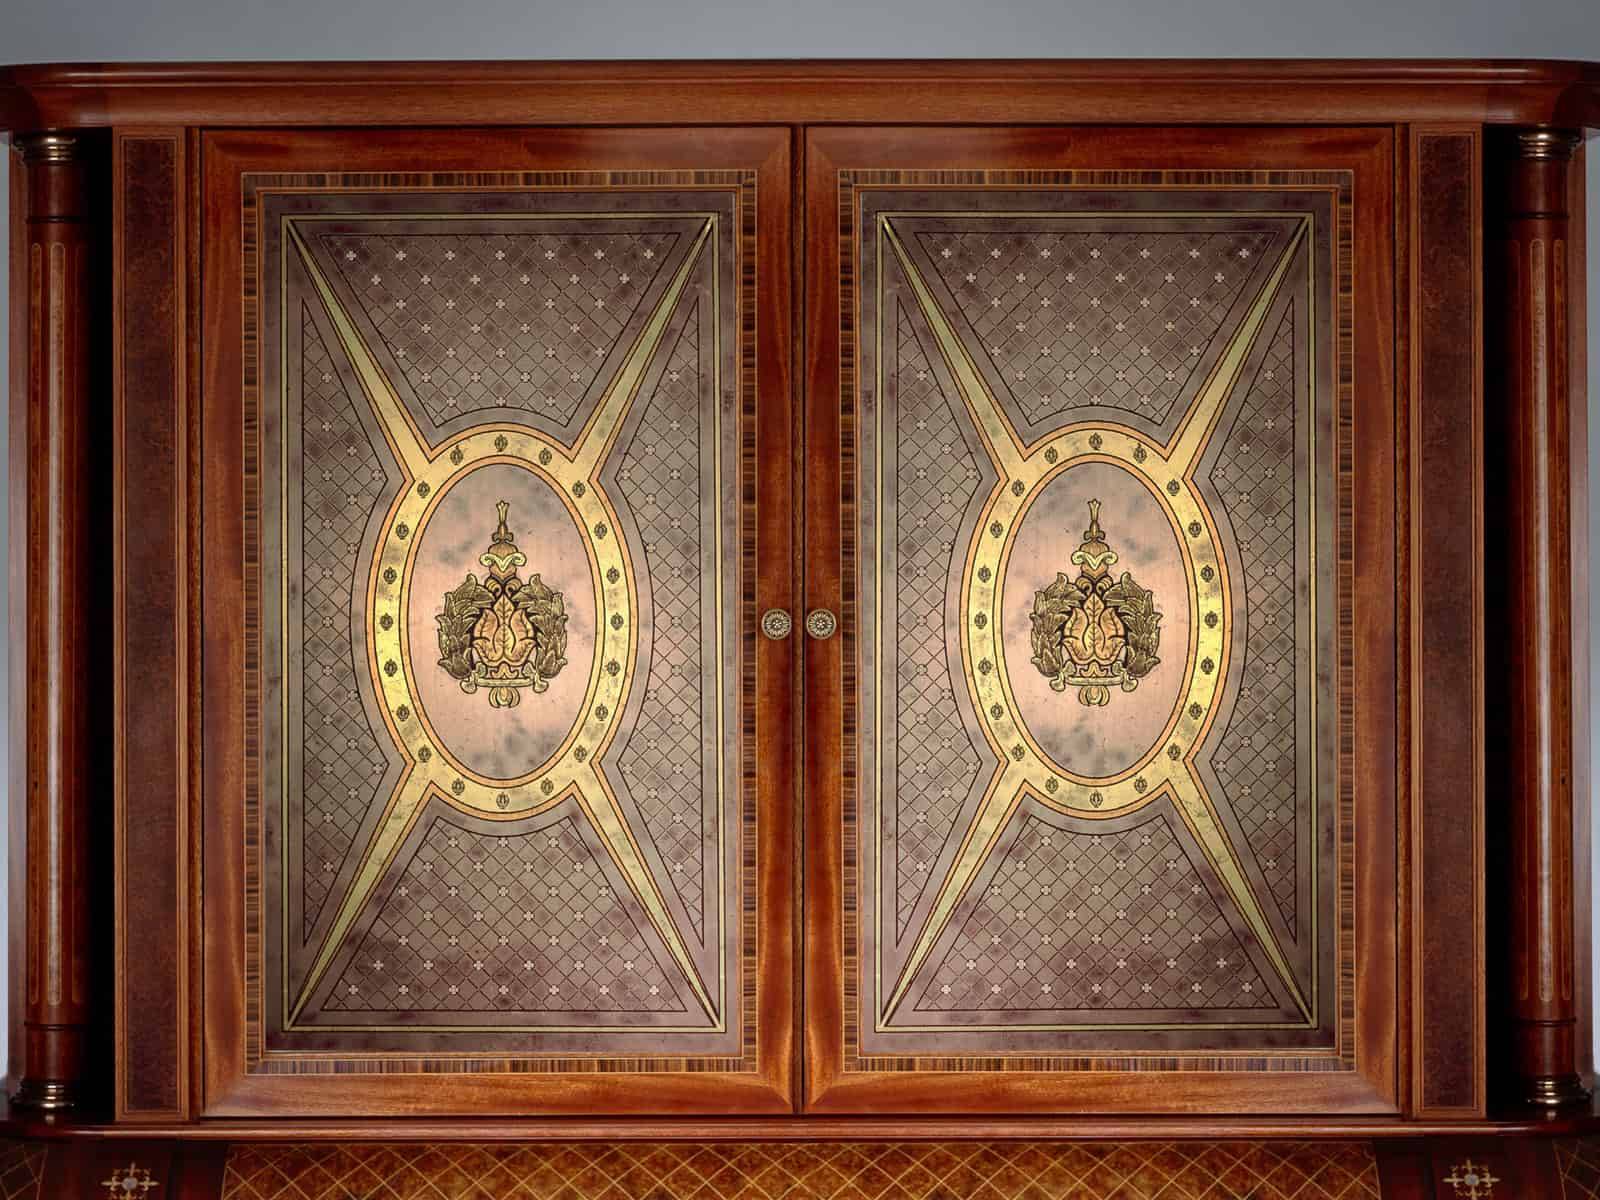 Verre Églomisé design and decoration for cabinet doors. | DESIGN: Silverlining Furniture | PHOTO: © Silverlining Furniture